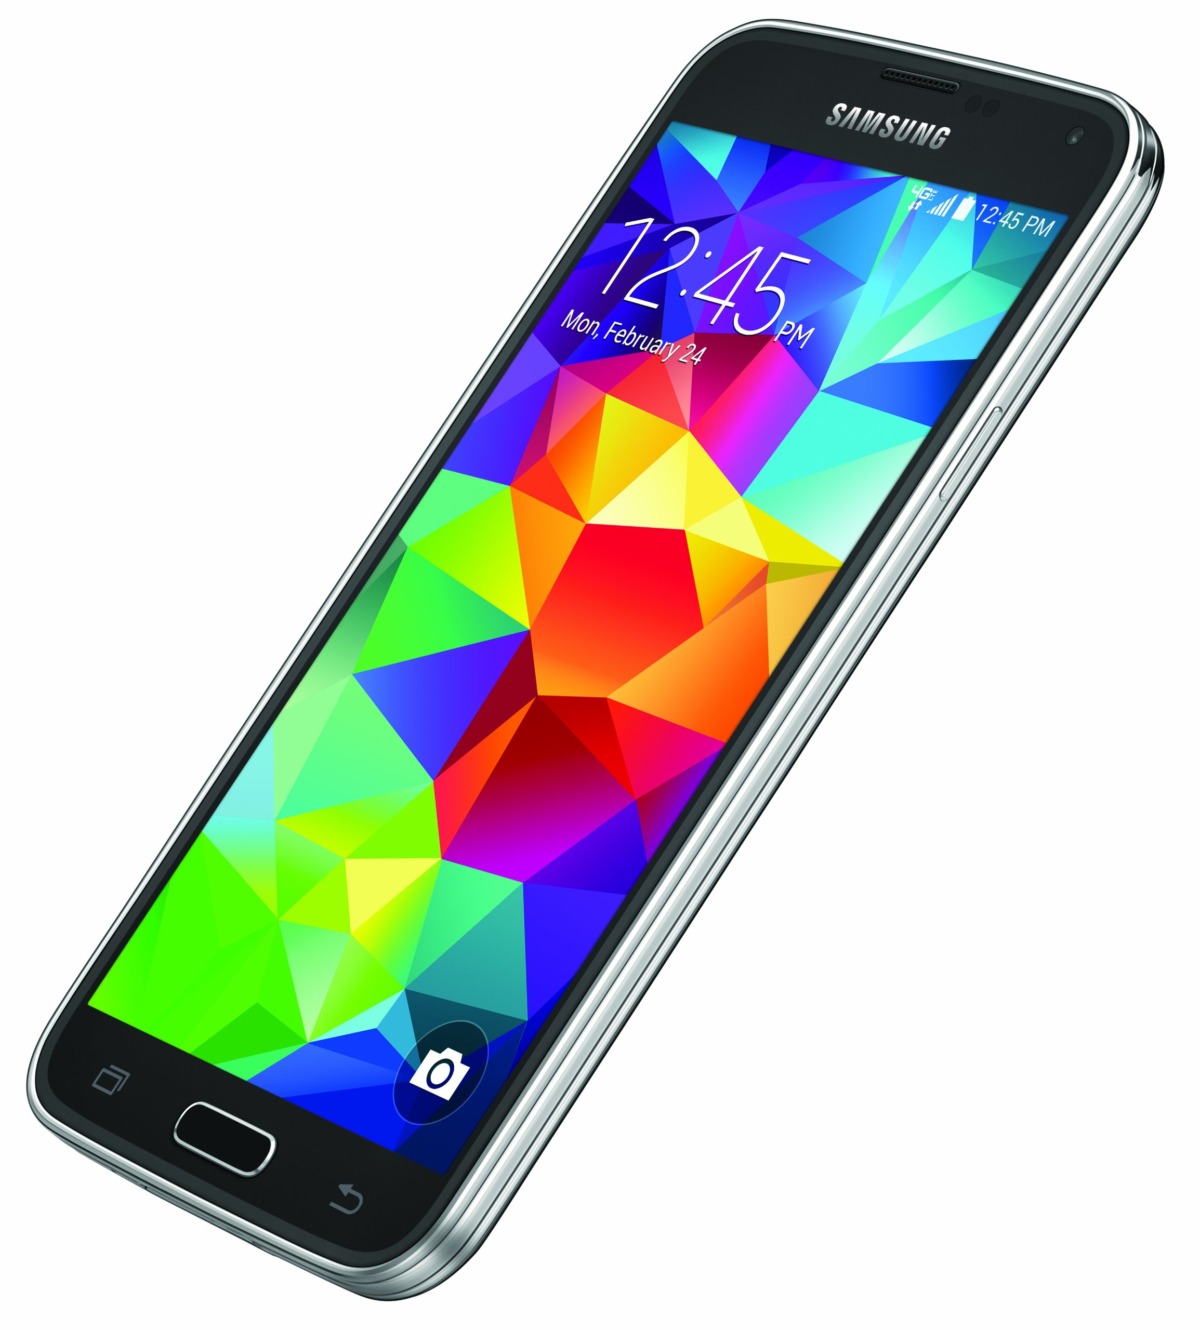 SAMSUNG Galaxy S5, Black 16GB (Verizon Wireless) | The Storepaperoomates Retail Market - Fast Affordable Shopping